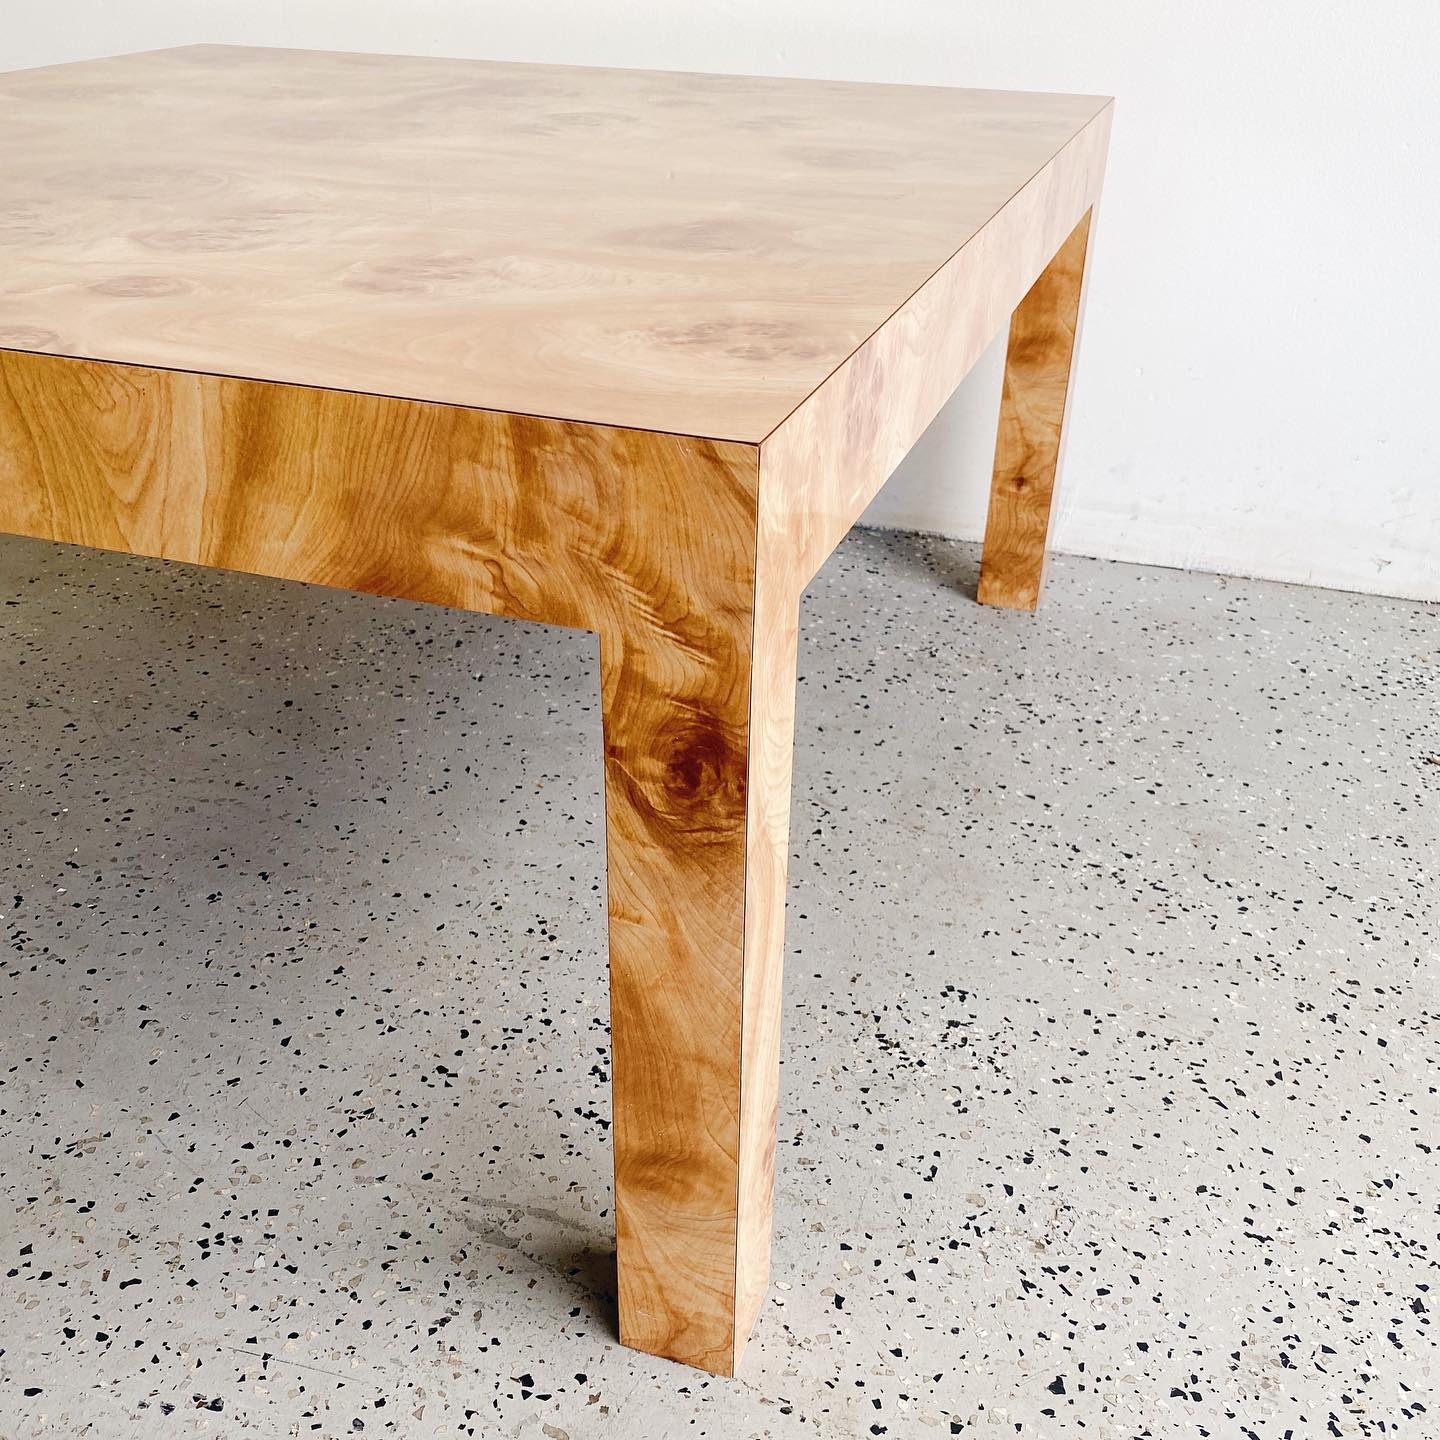 Burl Wood Laminate Coffee Table - Rehaus